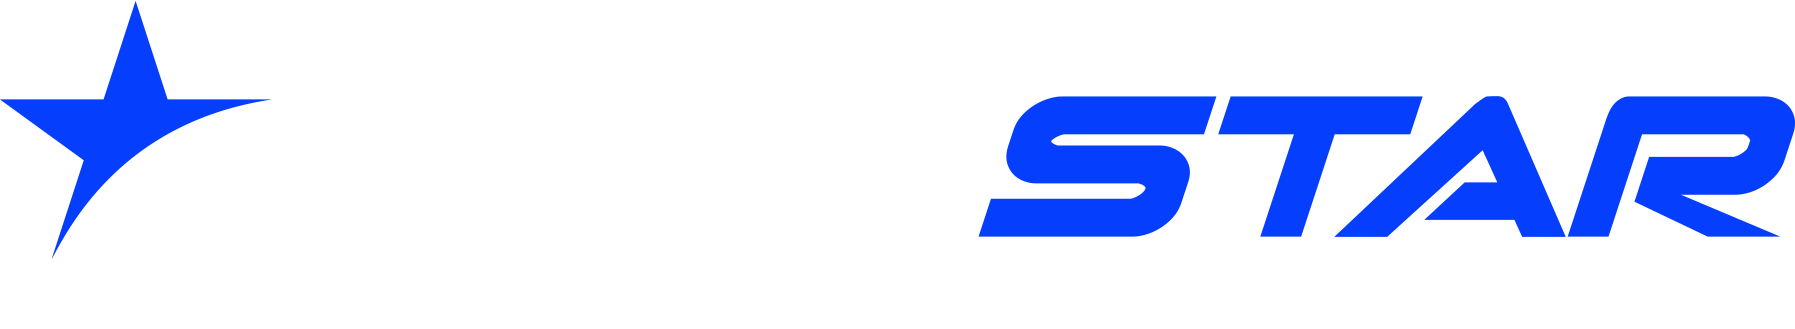 Five Star Boat Center logo